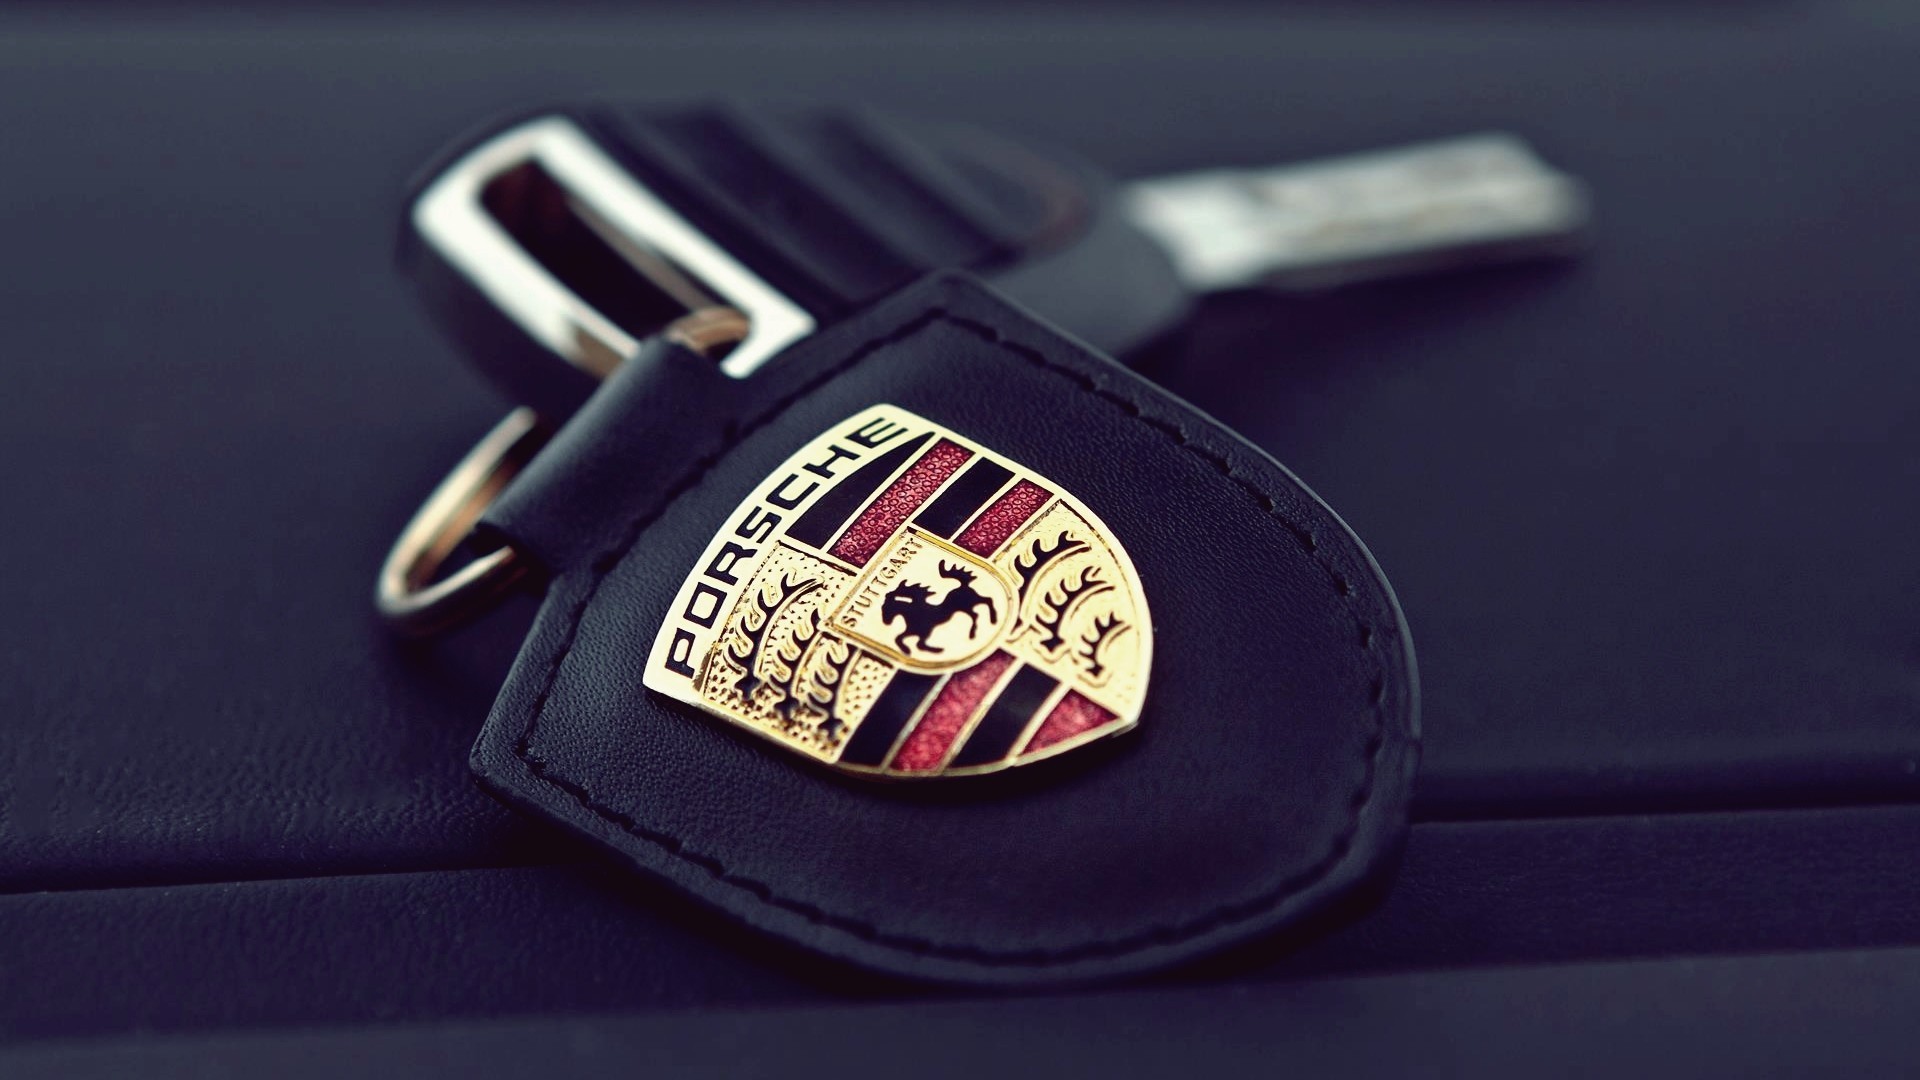 General 1920x1080 car Porsche logo keys car keys